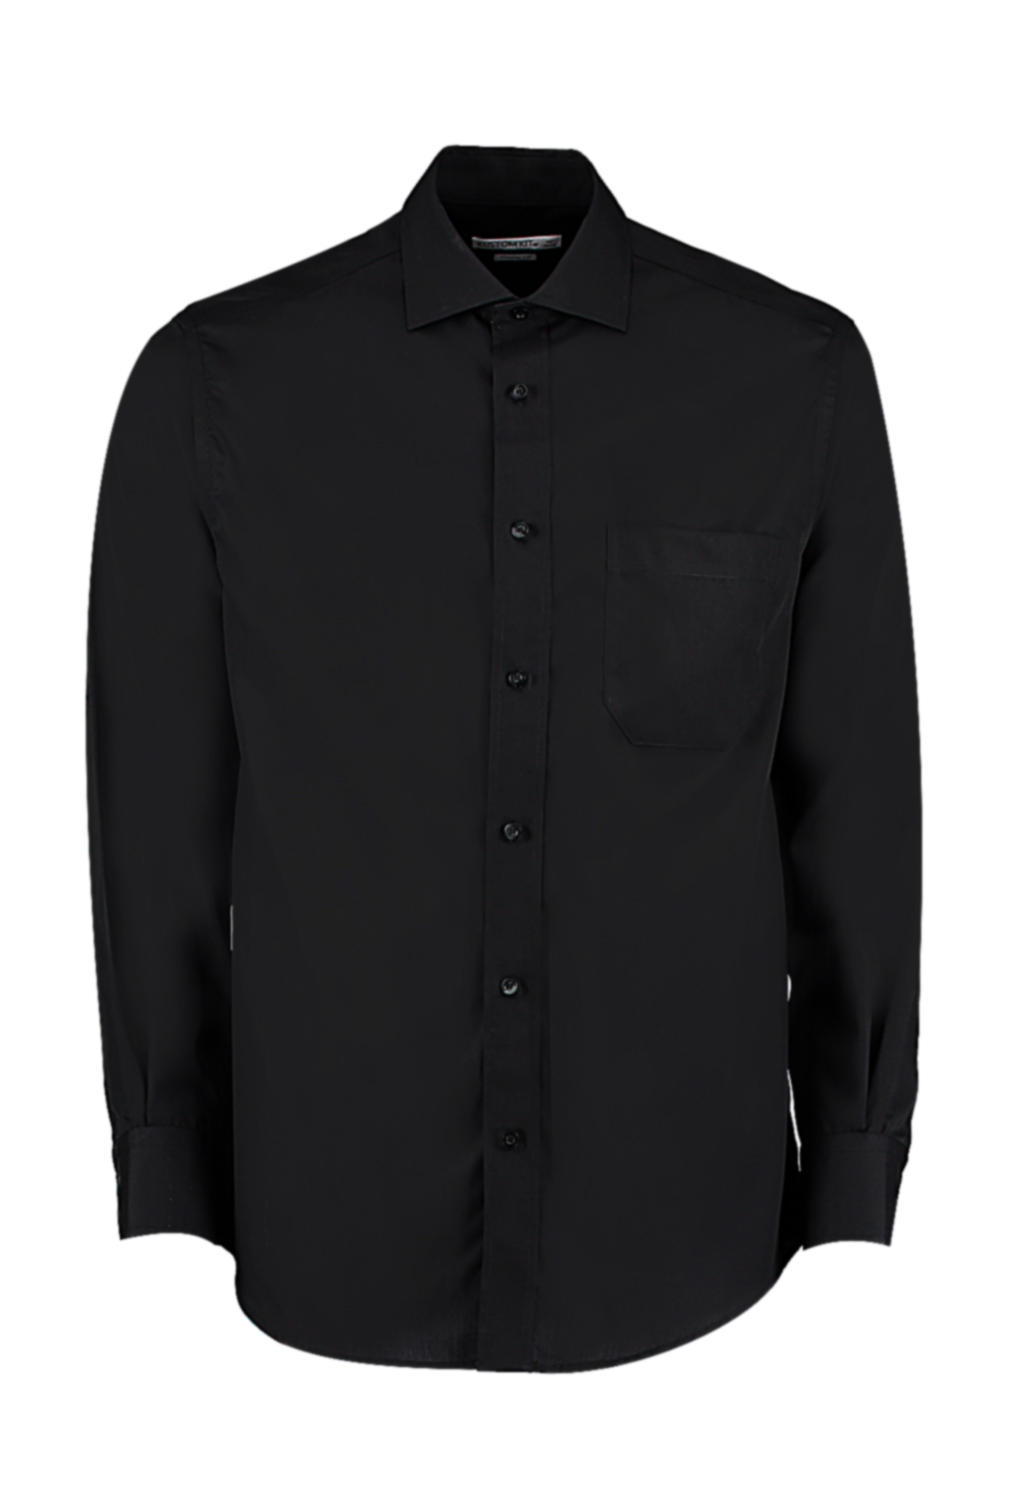  Classic Fit Non Iron Shirt in Farbe Black